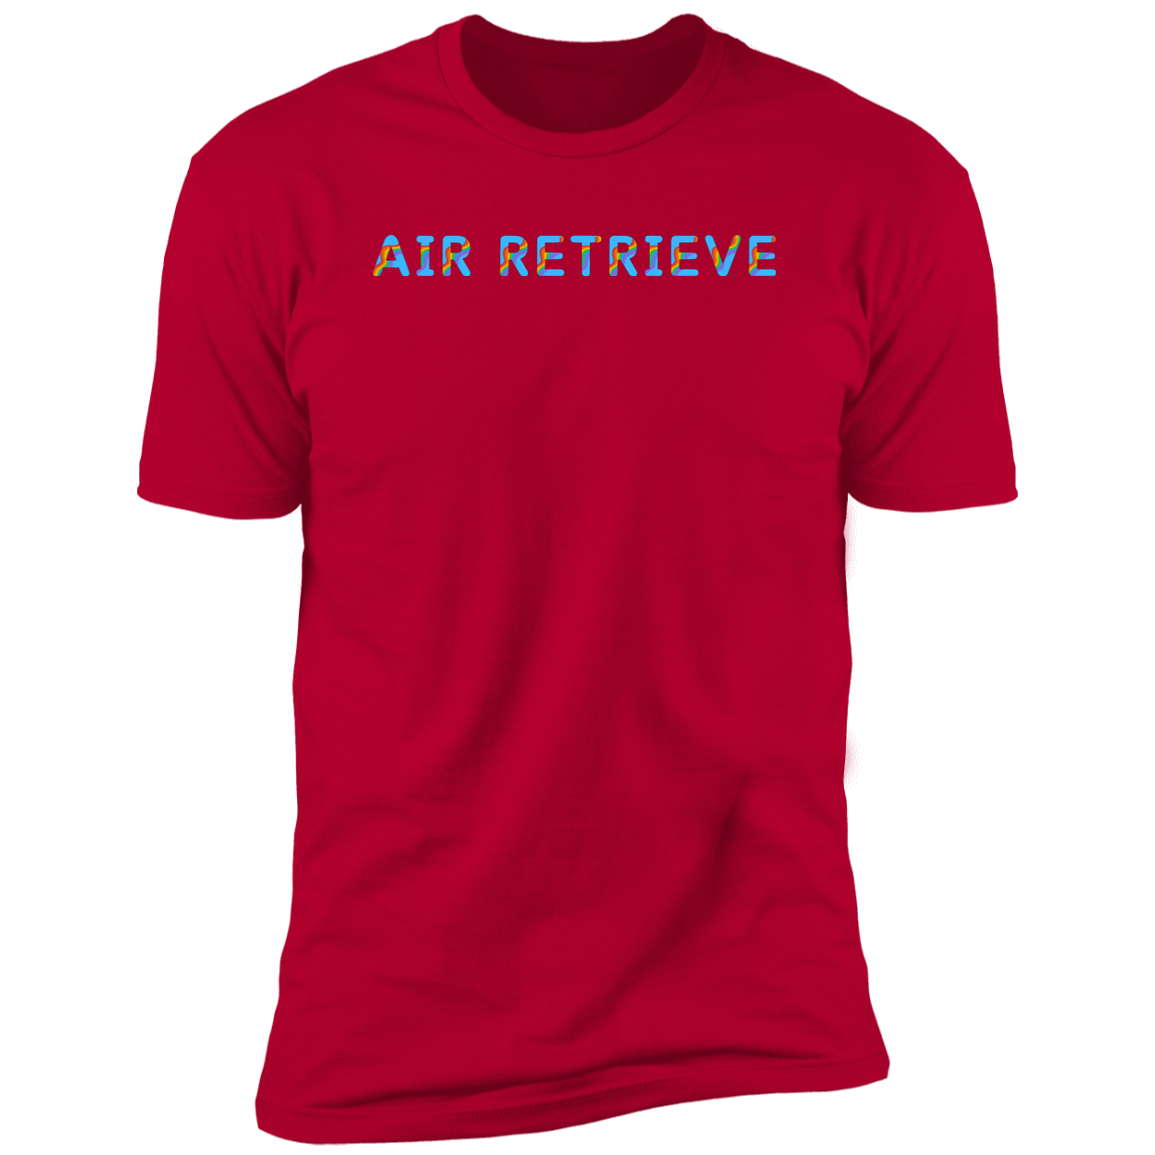 Air Retrieve Pride Dock diving t-shirt, dog pride air retrieve dock diving shirt for humans, in red